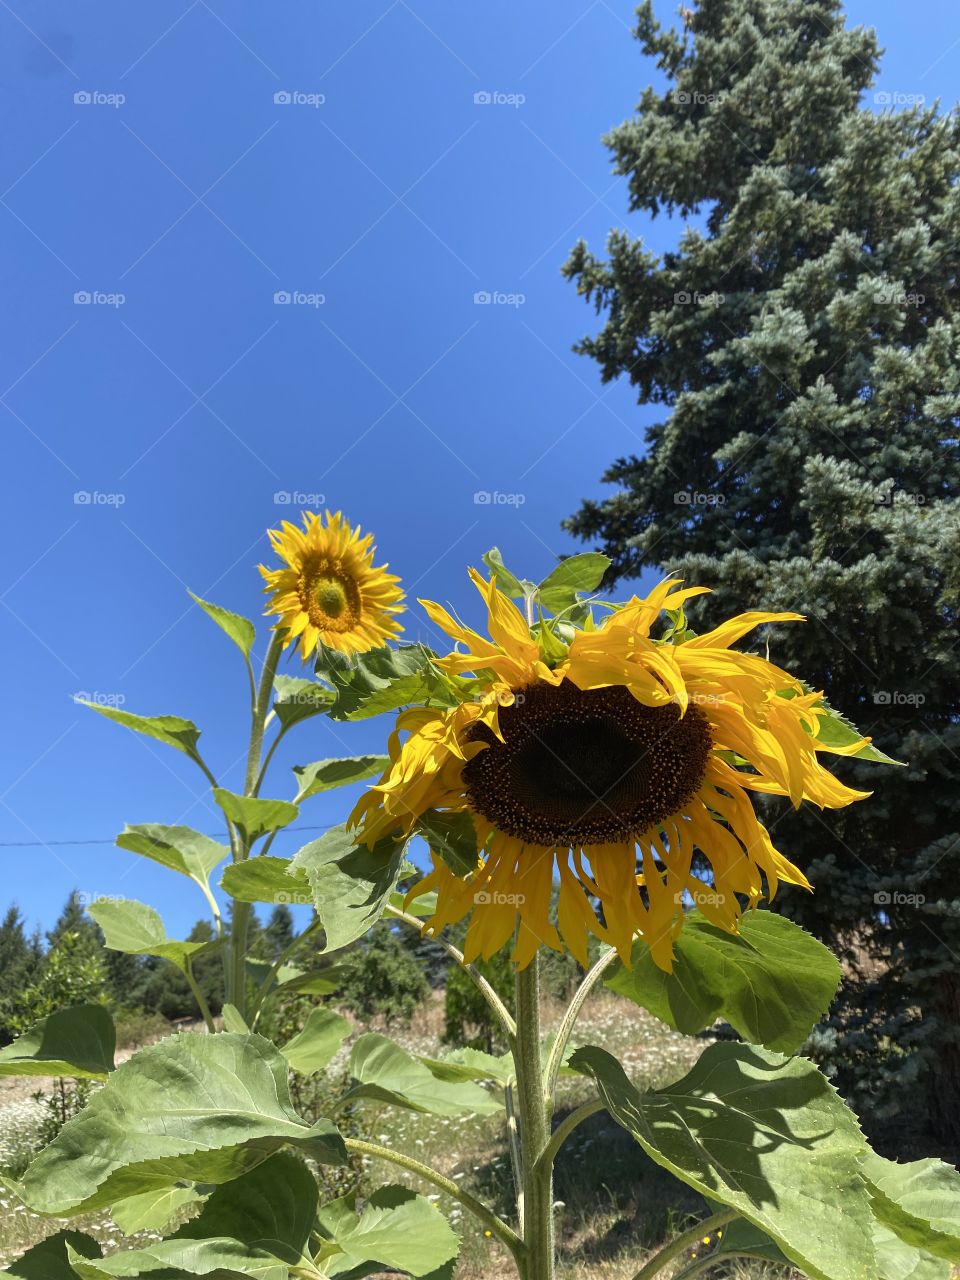 Sunflower power